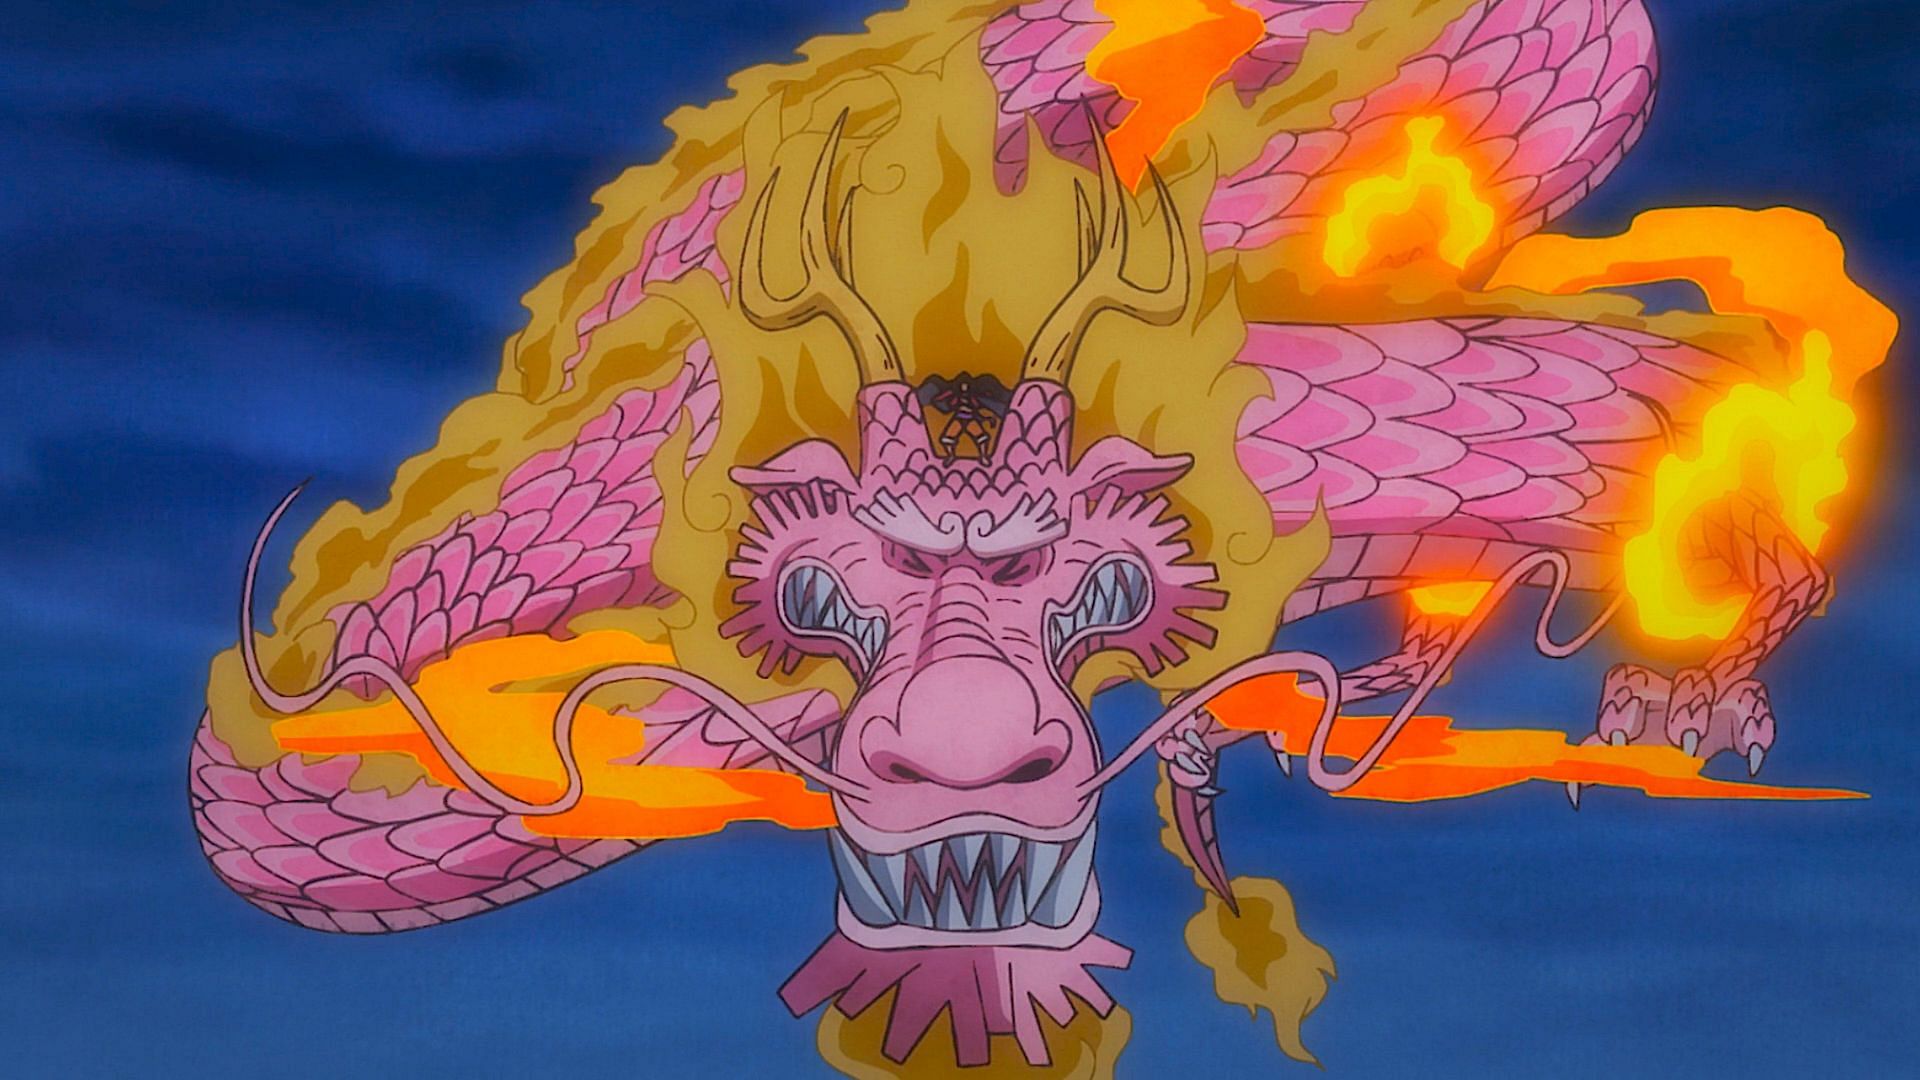 One Piece Episode 1049: Momo shows astonishing courage